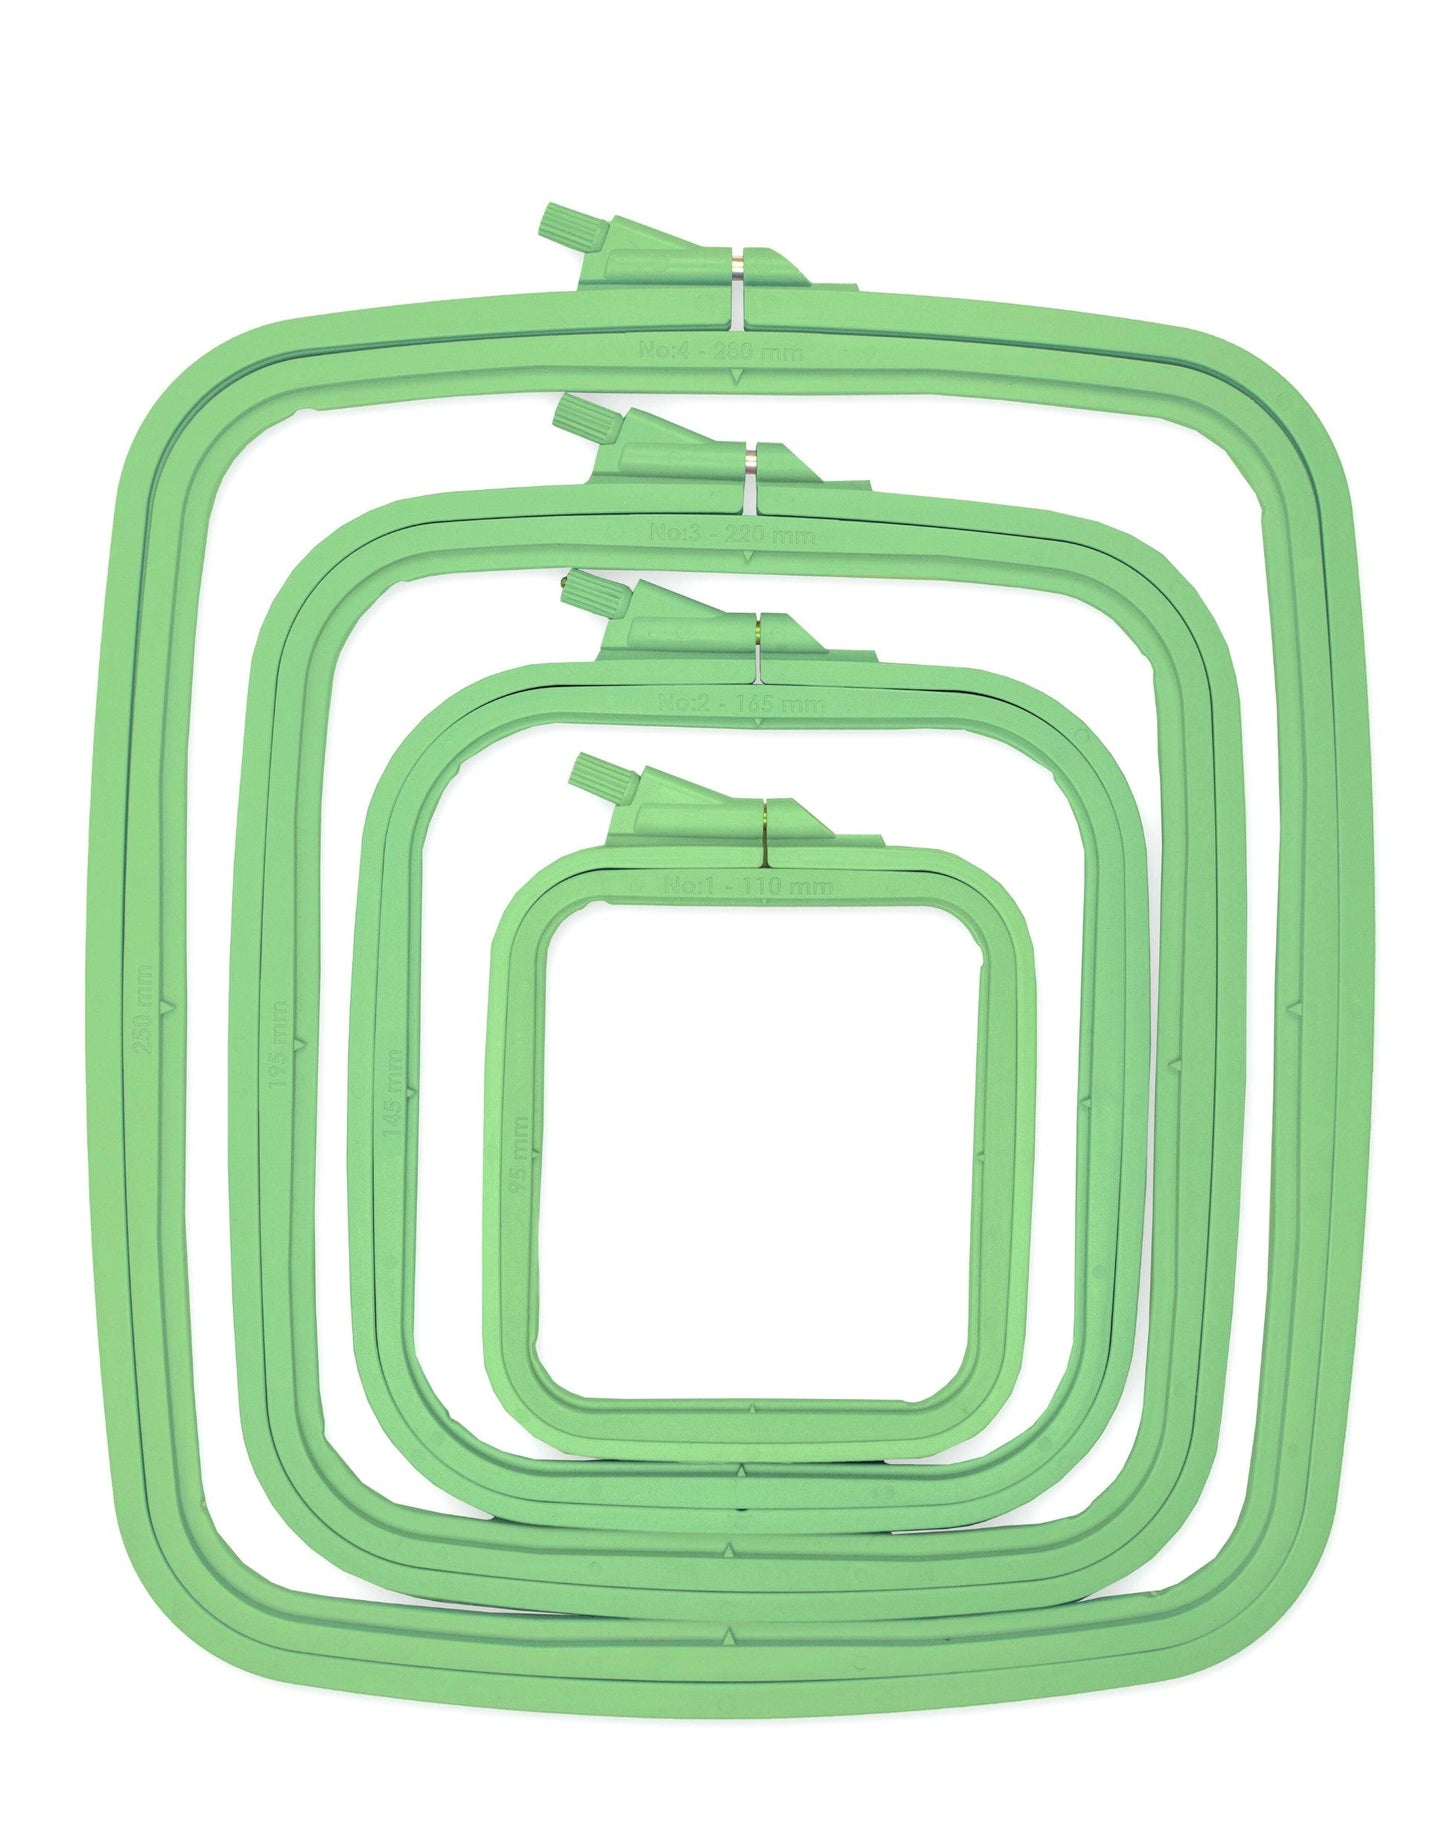 Cross Stitch Square Hoop, Green - Nurge Embroidery Hoop